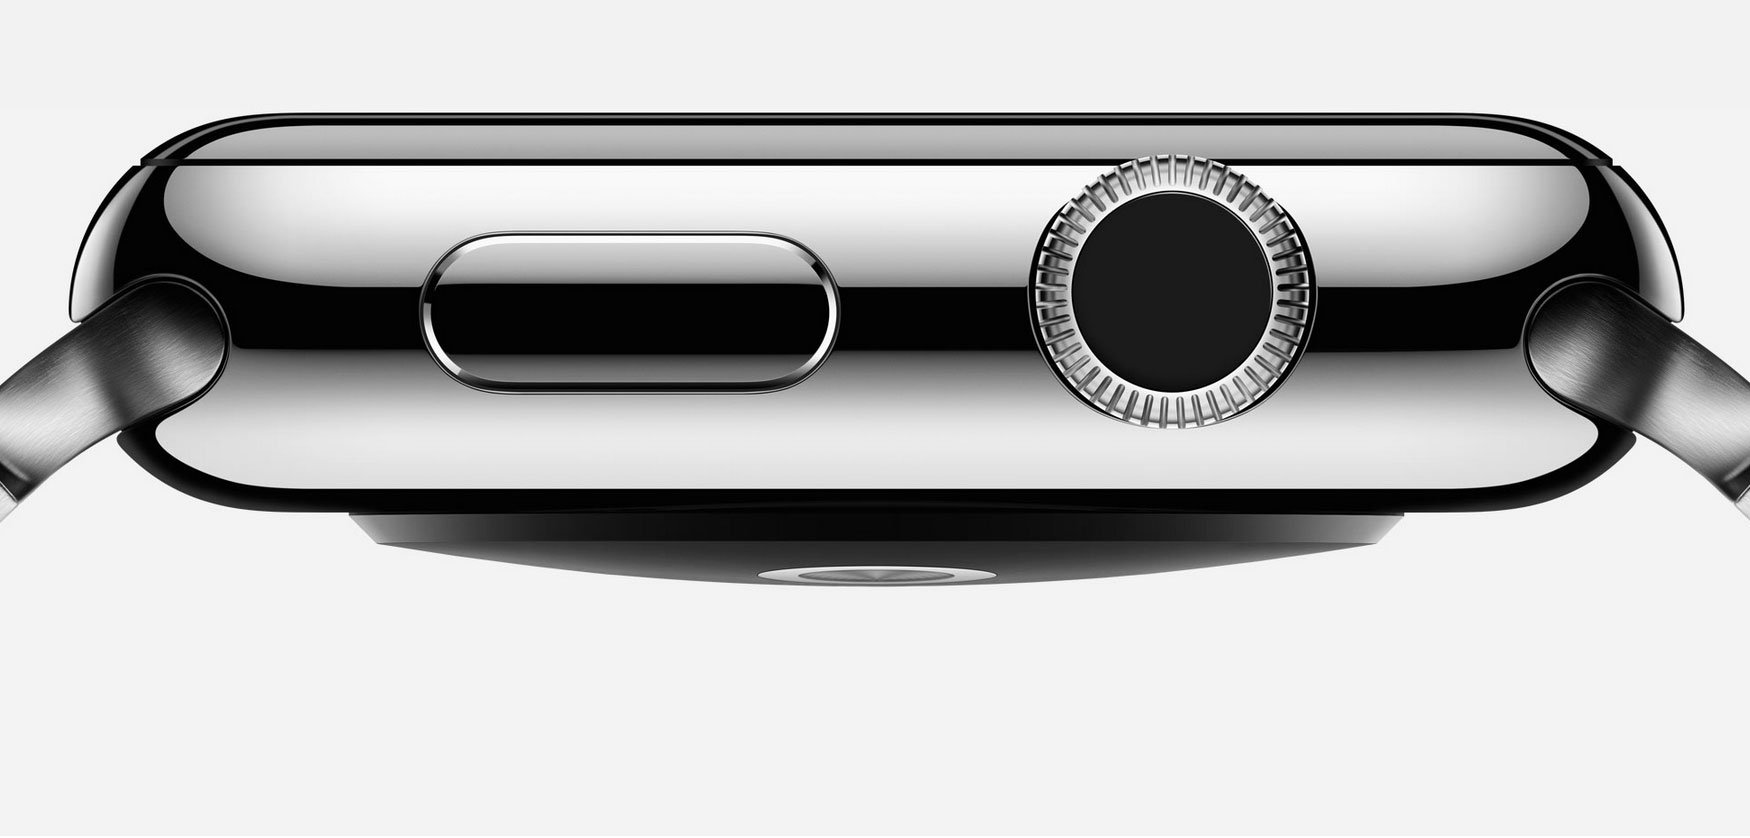 Wann kommt die Apple Watch: Apple Uhr Release im Frühling 2015! 2